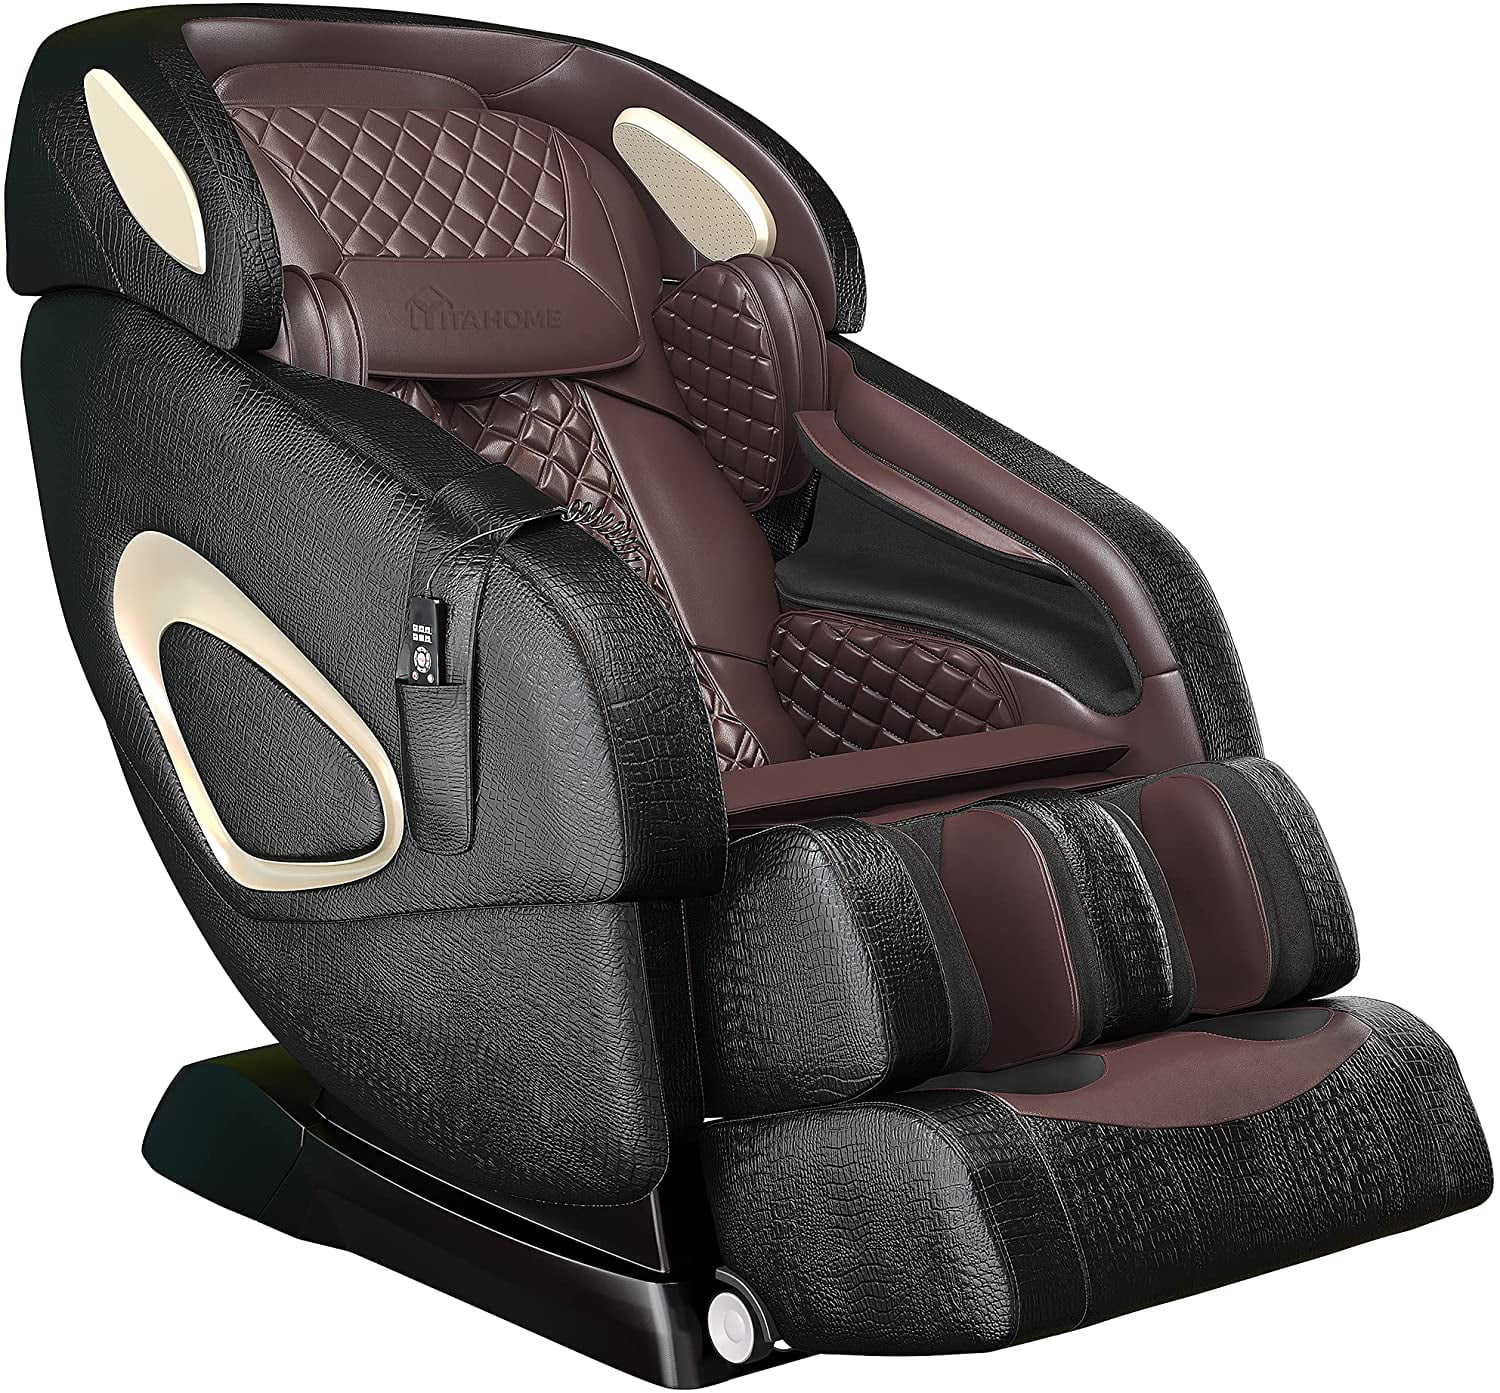 Yitahome Full Shiatsu Electric, Homedics Black Leather Massage Chair Reviews